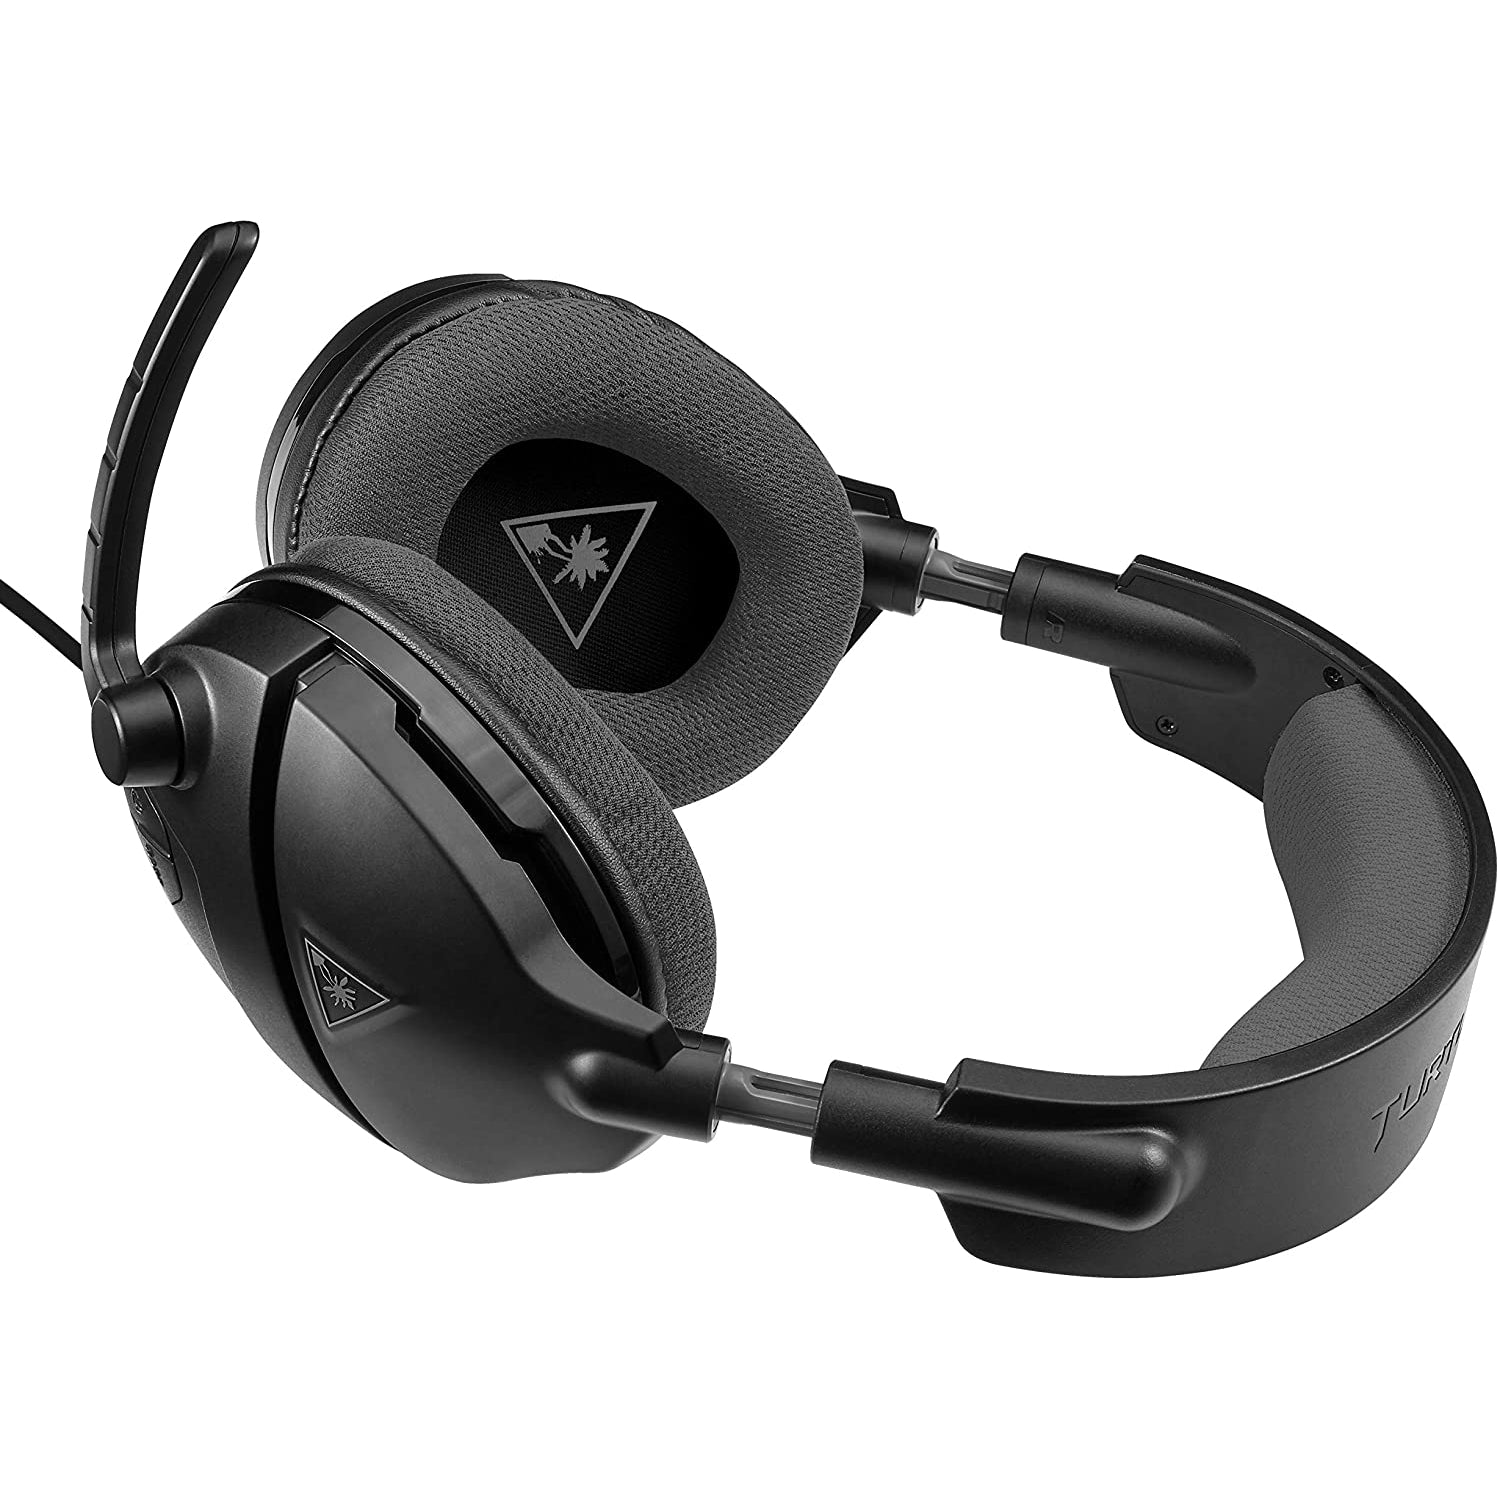 Turtle Beach Atlas Three Amplified Gaming Headset - Black - Refurbished Excellent